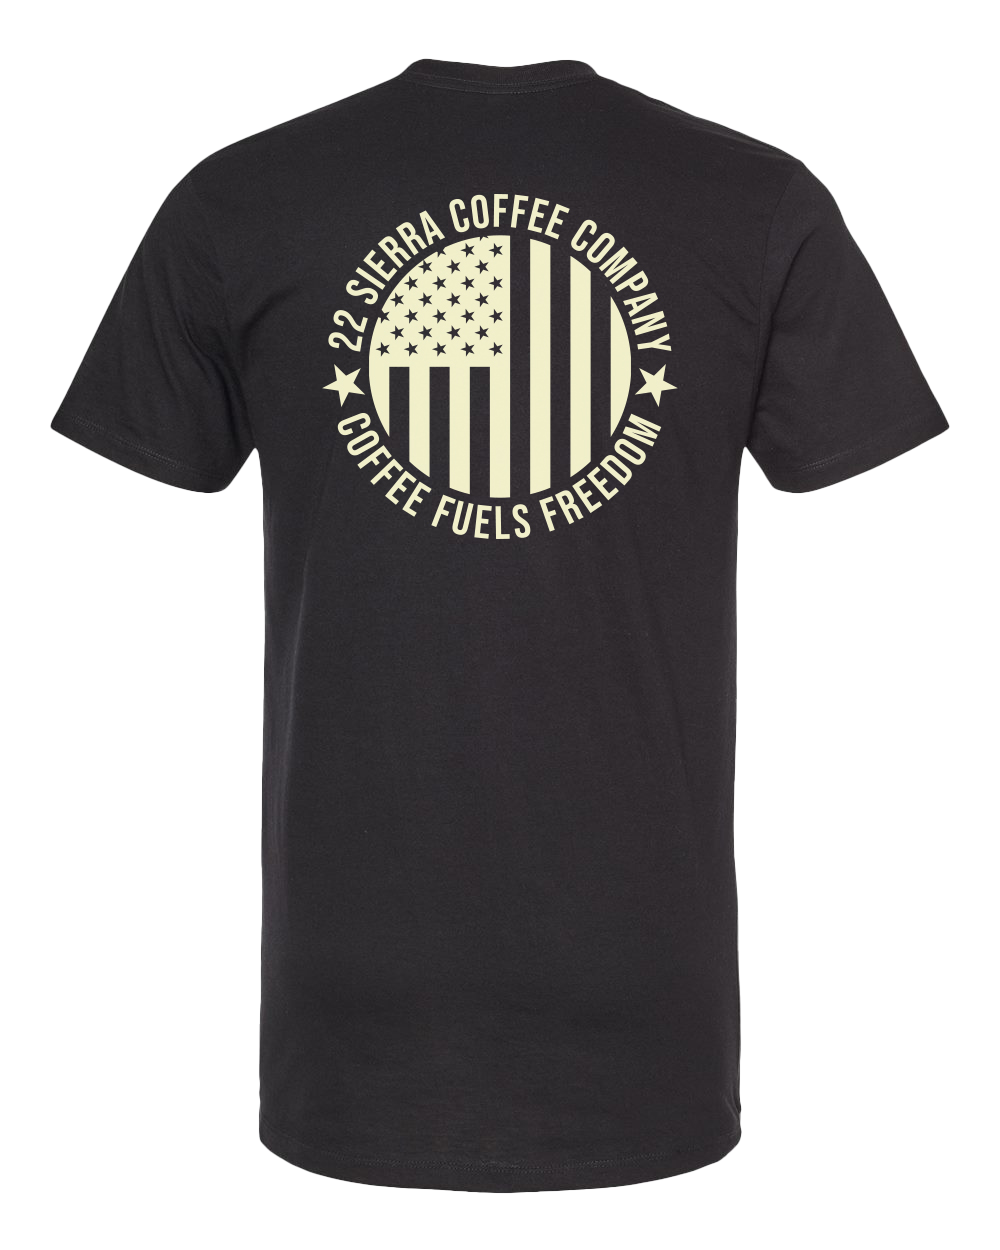 Coffee Fuels Freedom T-Shirt - Black